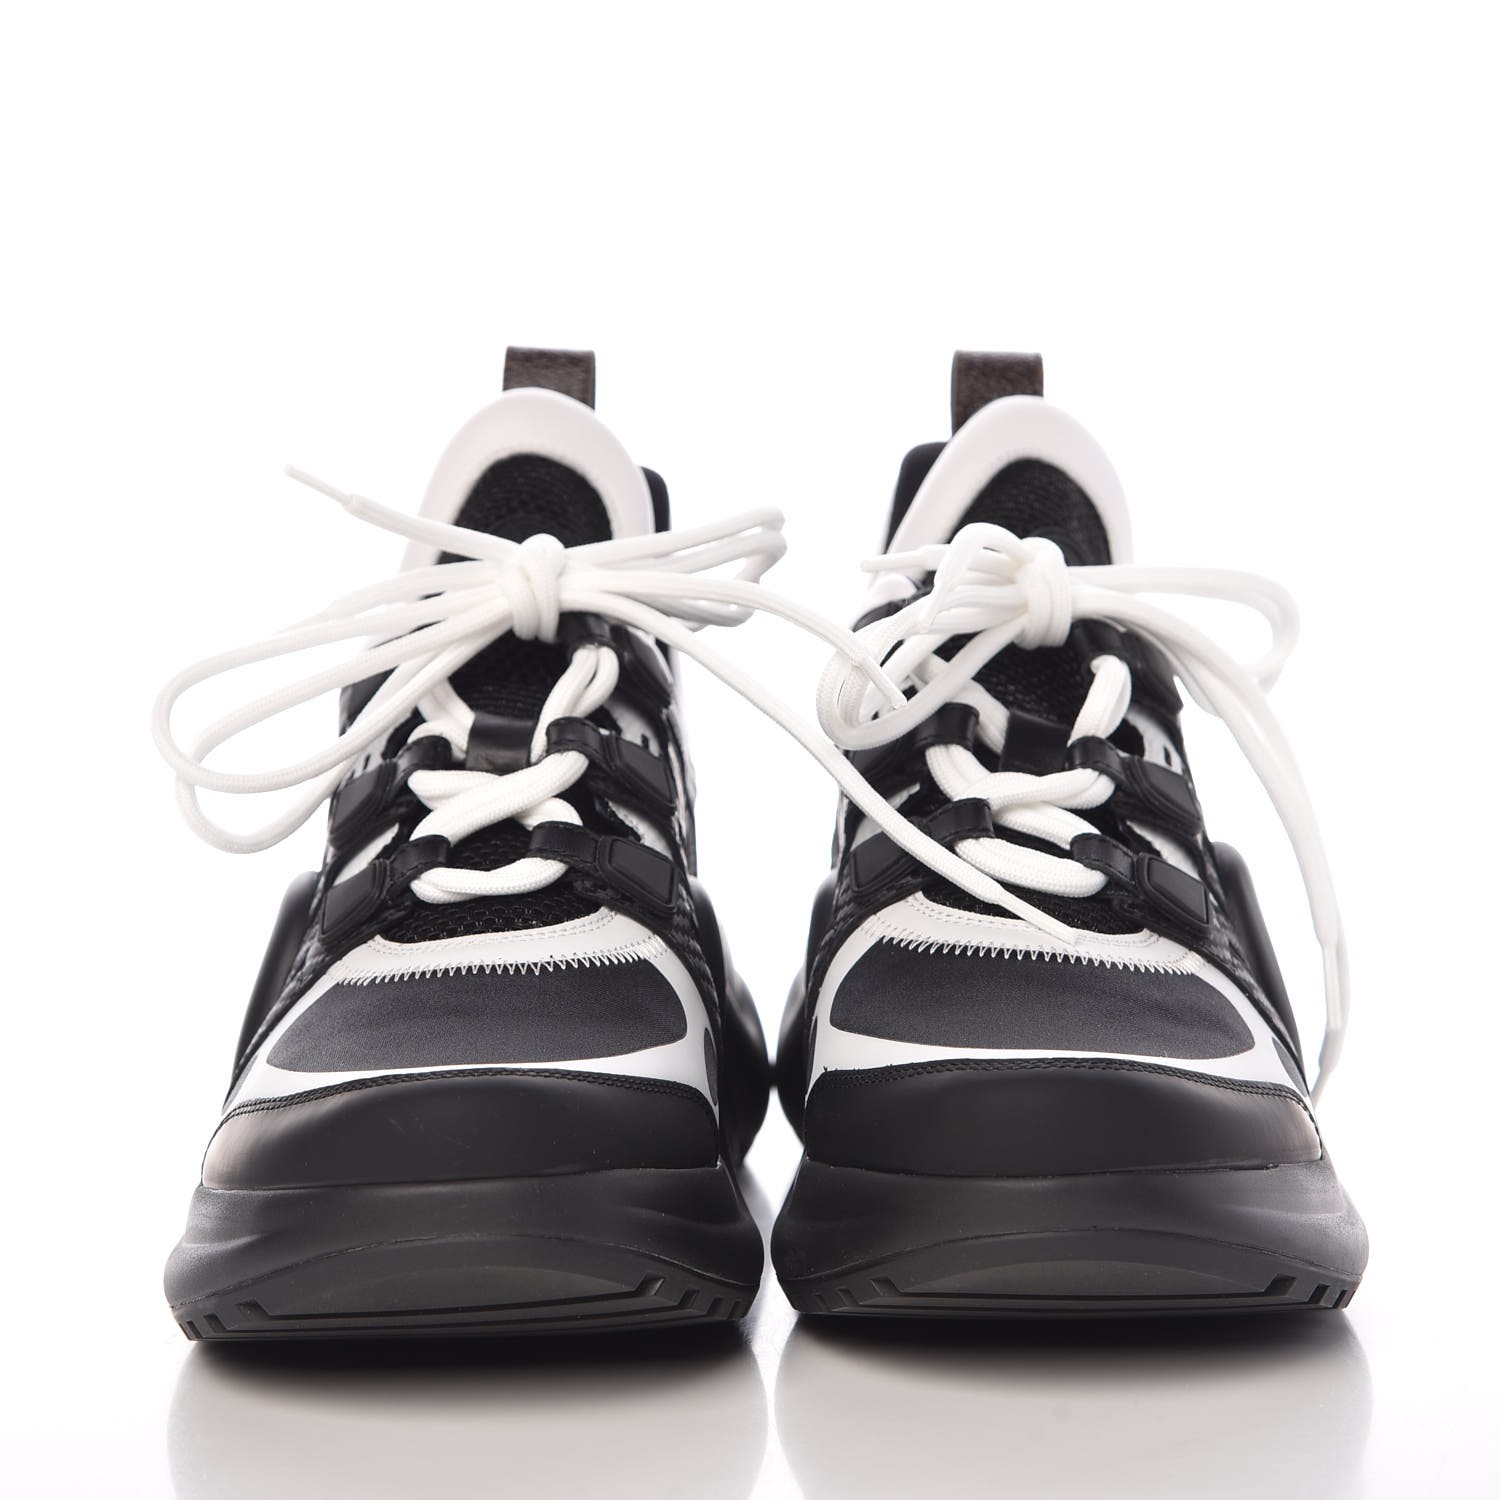 LOUIS VUITTON Calfskin Technical Nylon LV Archlight Sneakers 40 Black White 347516